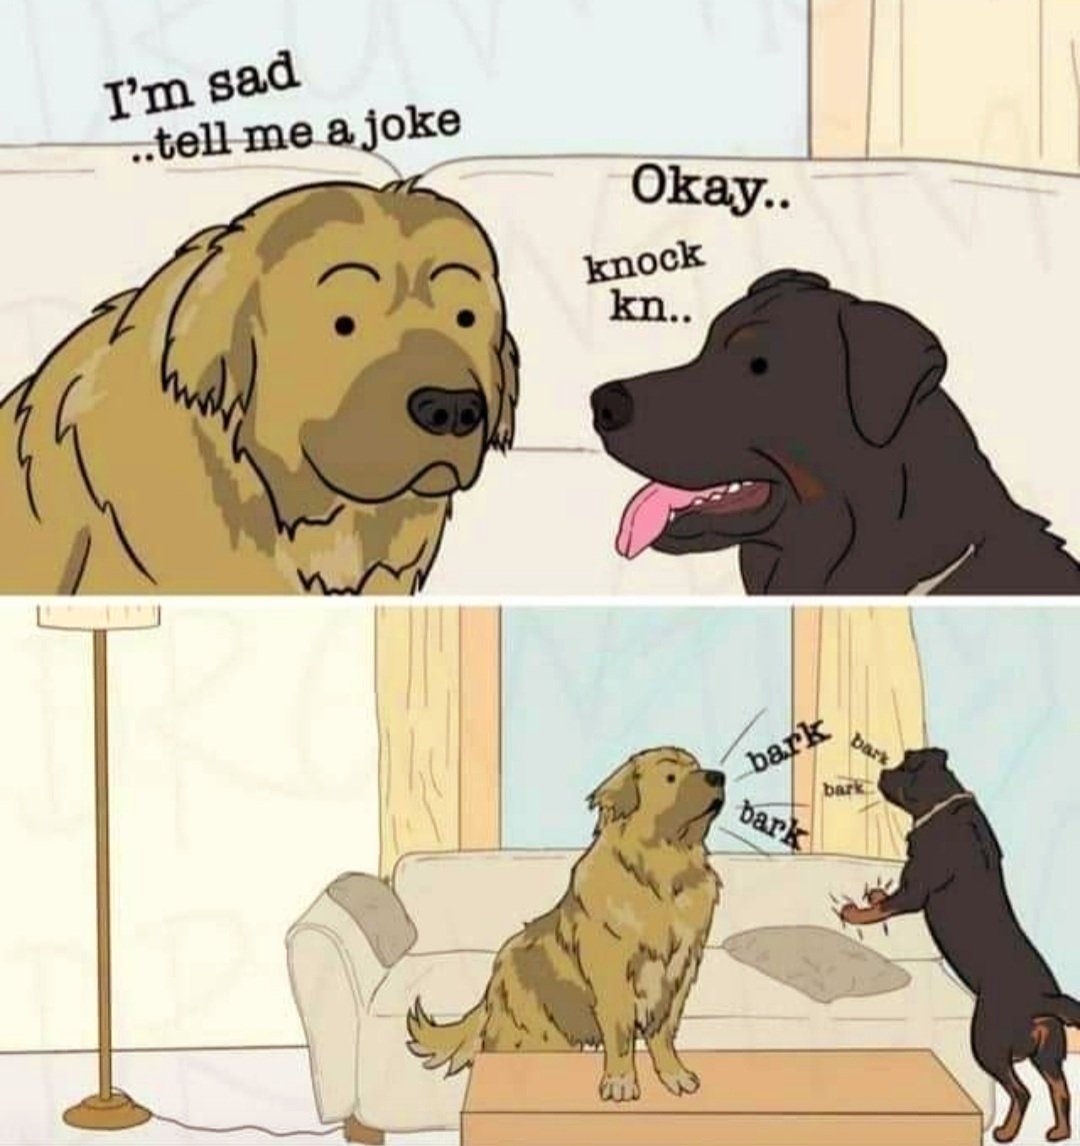 Tell me joke. Knock Knock meme. Три собаки Мем. Woof meme. Knock Knock Мем.